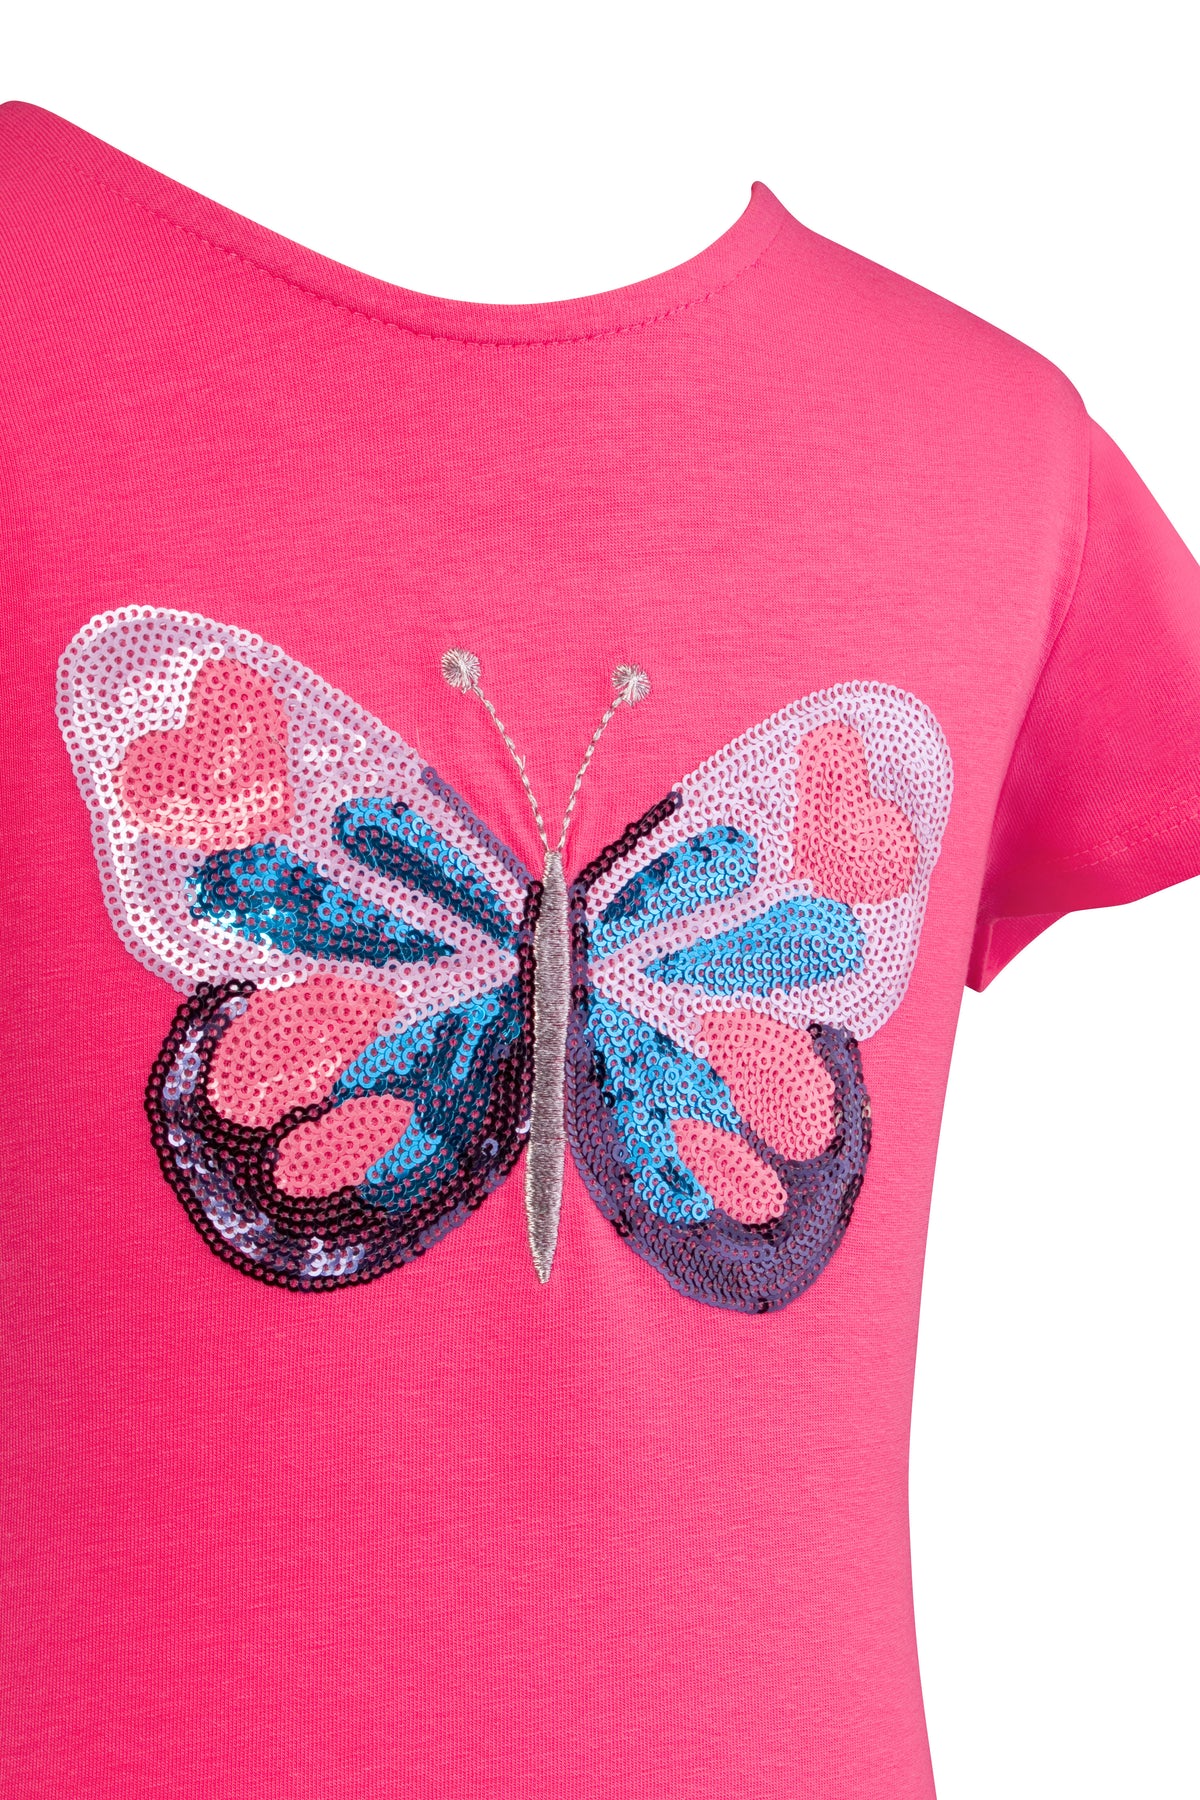 Mädchen T-Shirt Schmetterling Rosa 731305